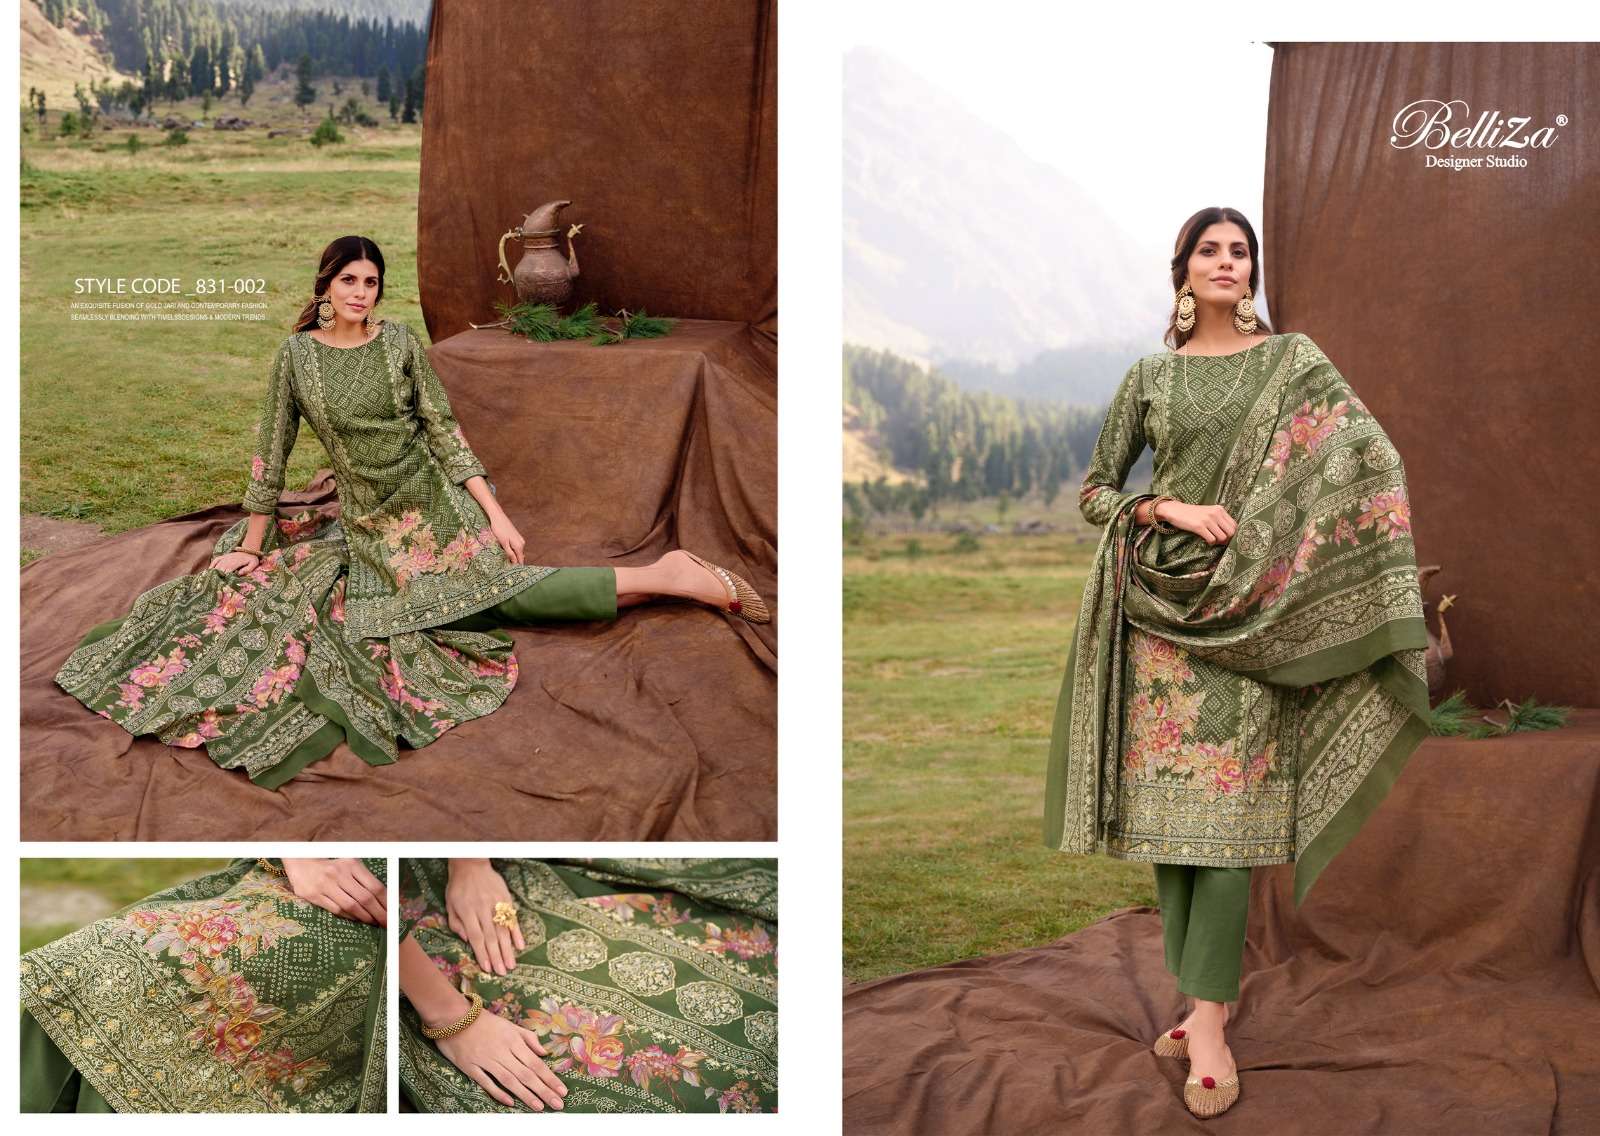 belliza designer studio khwaab viscose catchy salwar suit catalog